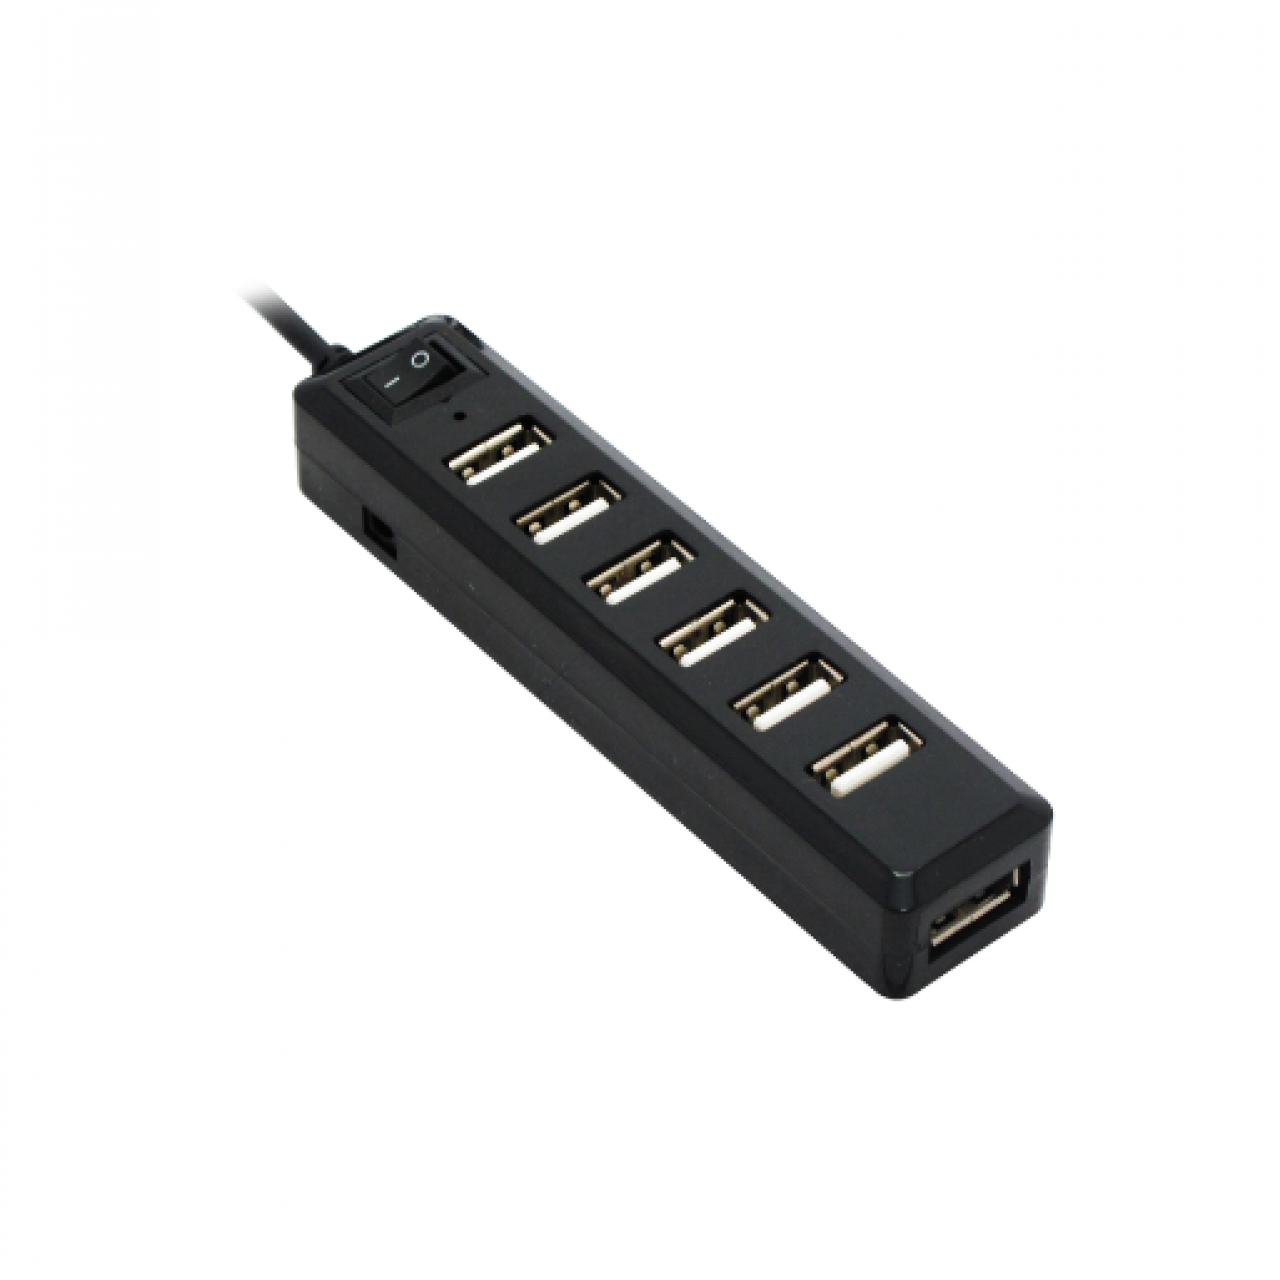 HUB USB 2.0 με 6 USB Θήρες με διακόπτη - 3969 - Μαύρο - ΟΕΜ